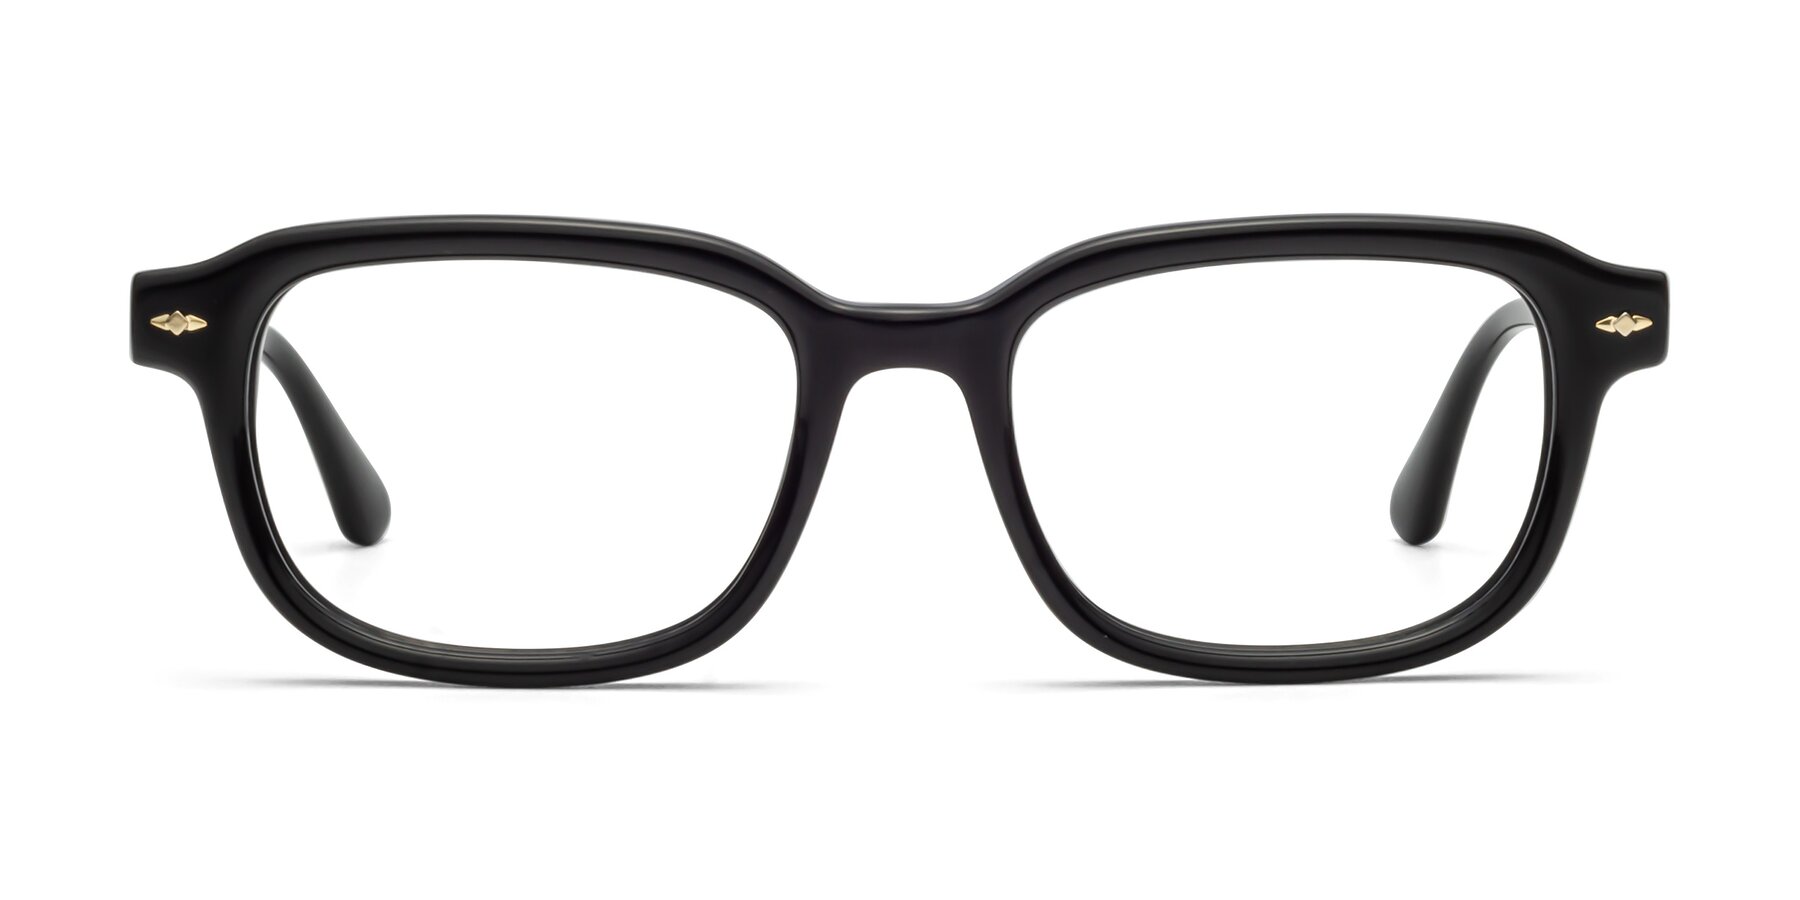 1477 - Black Sunglasses Frame